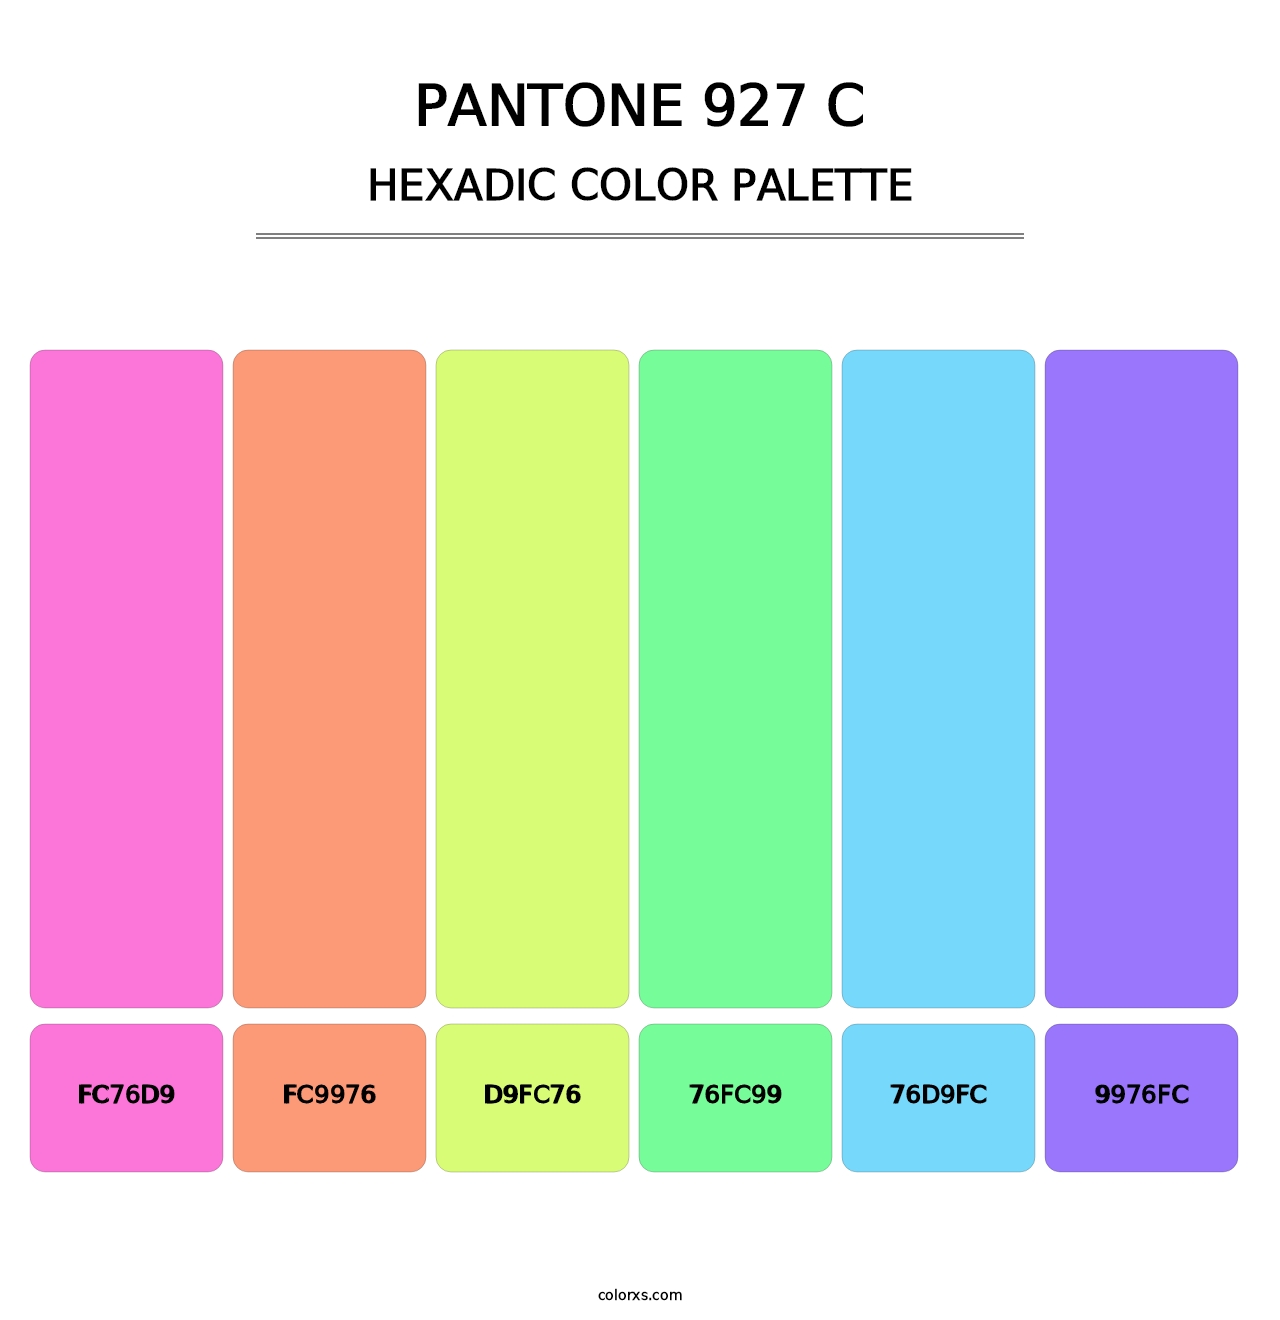 PANTONE 927 C - Hexadic Color Palette